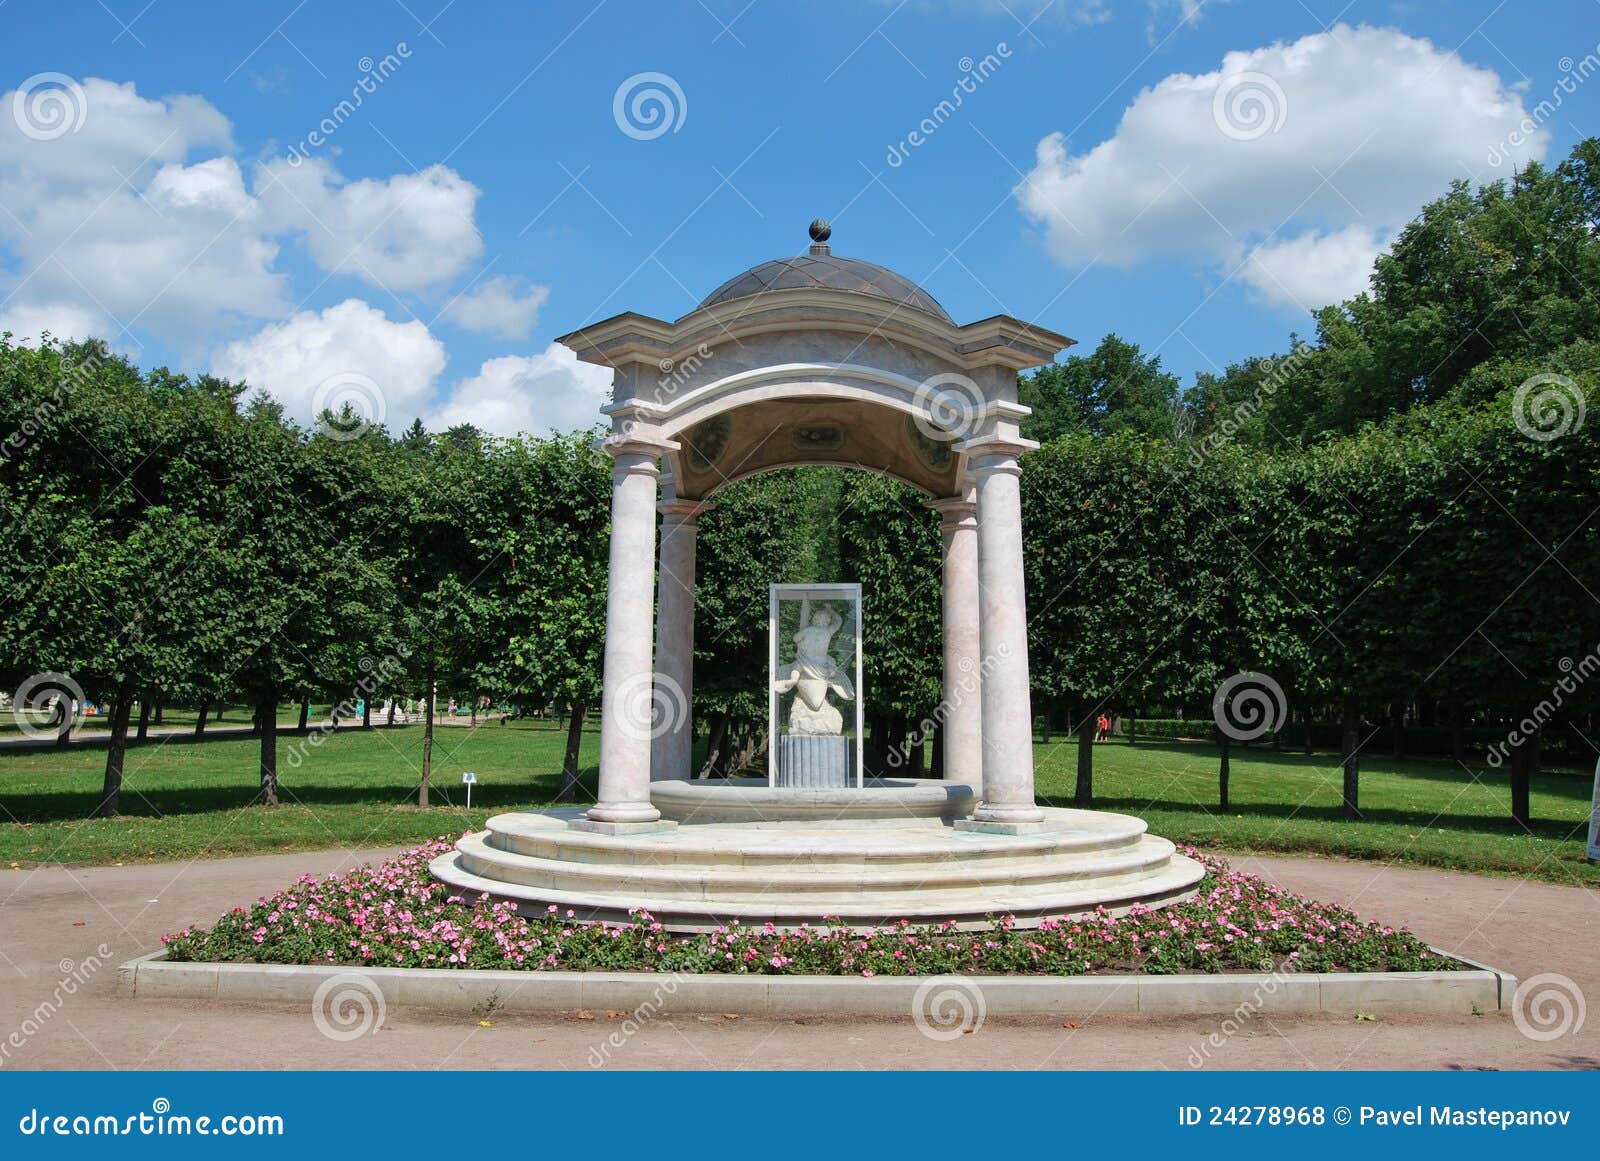 Arkhangelskoye Estate Monument Royalty Free Stock Photos - Image: 24278968